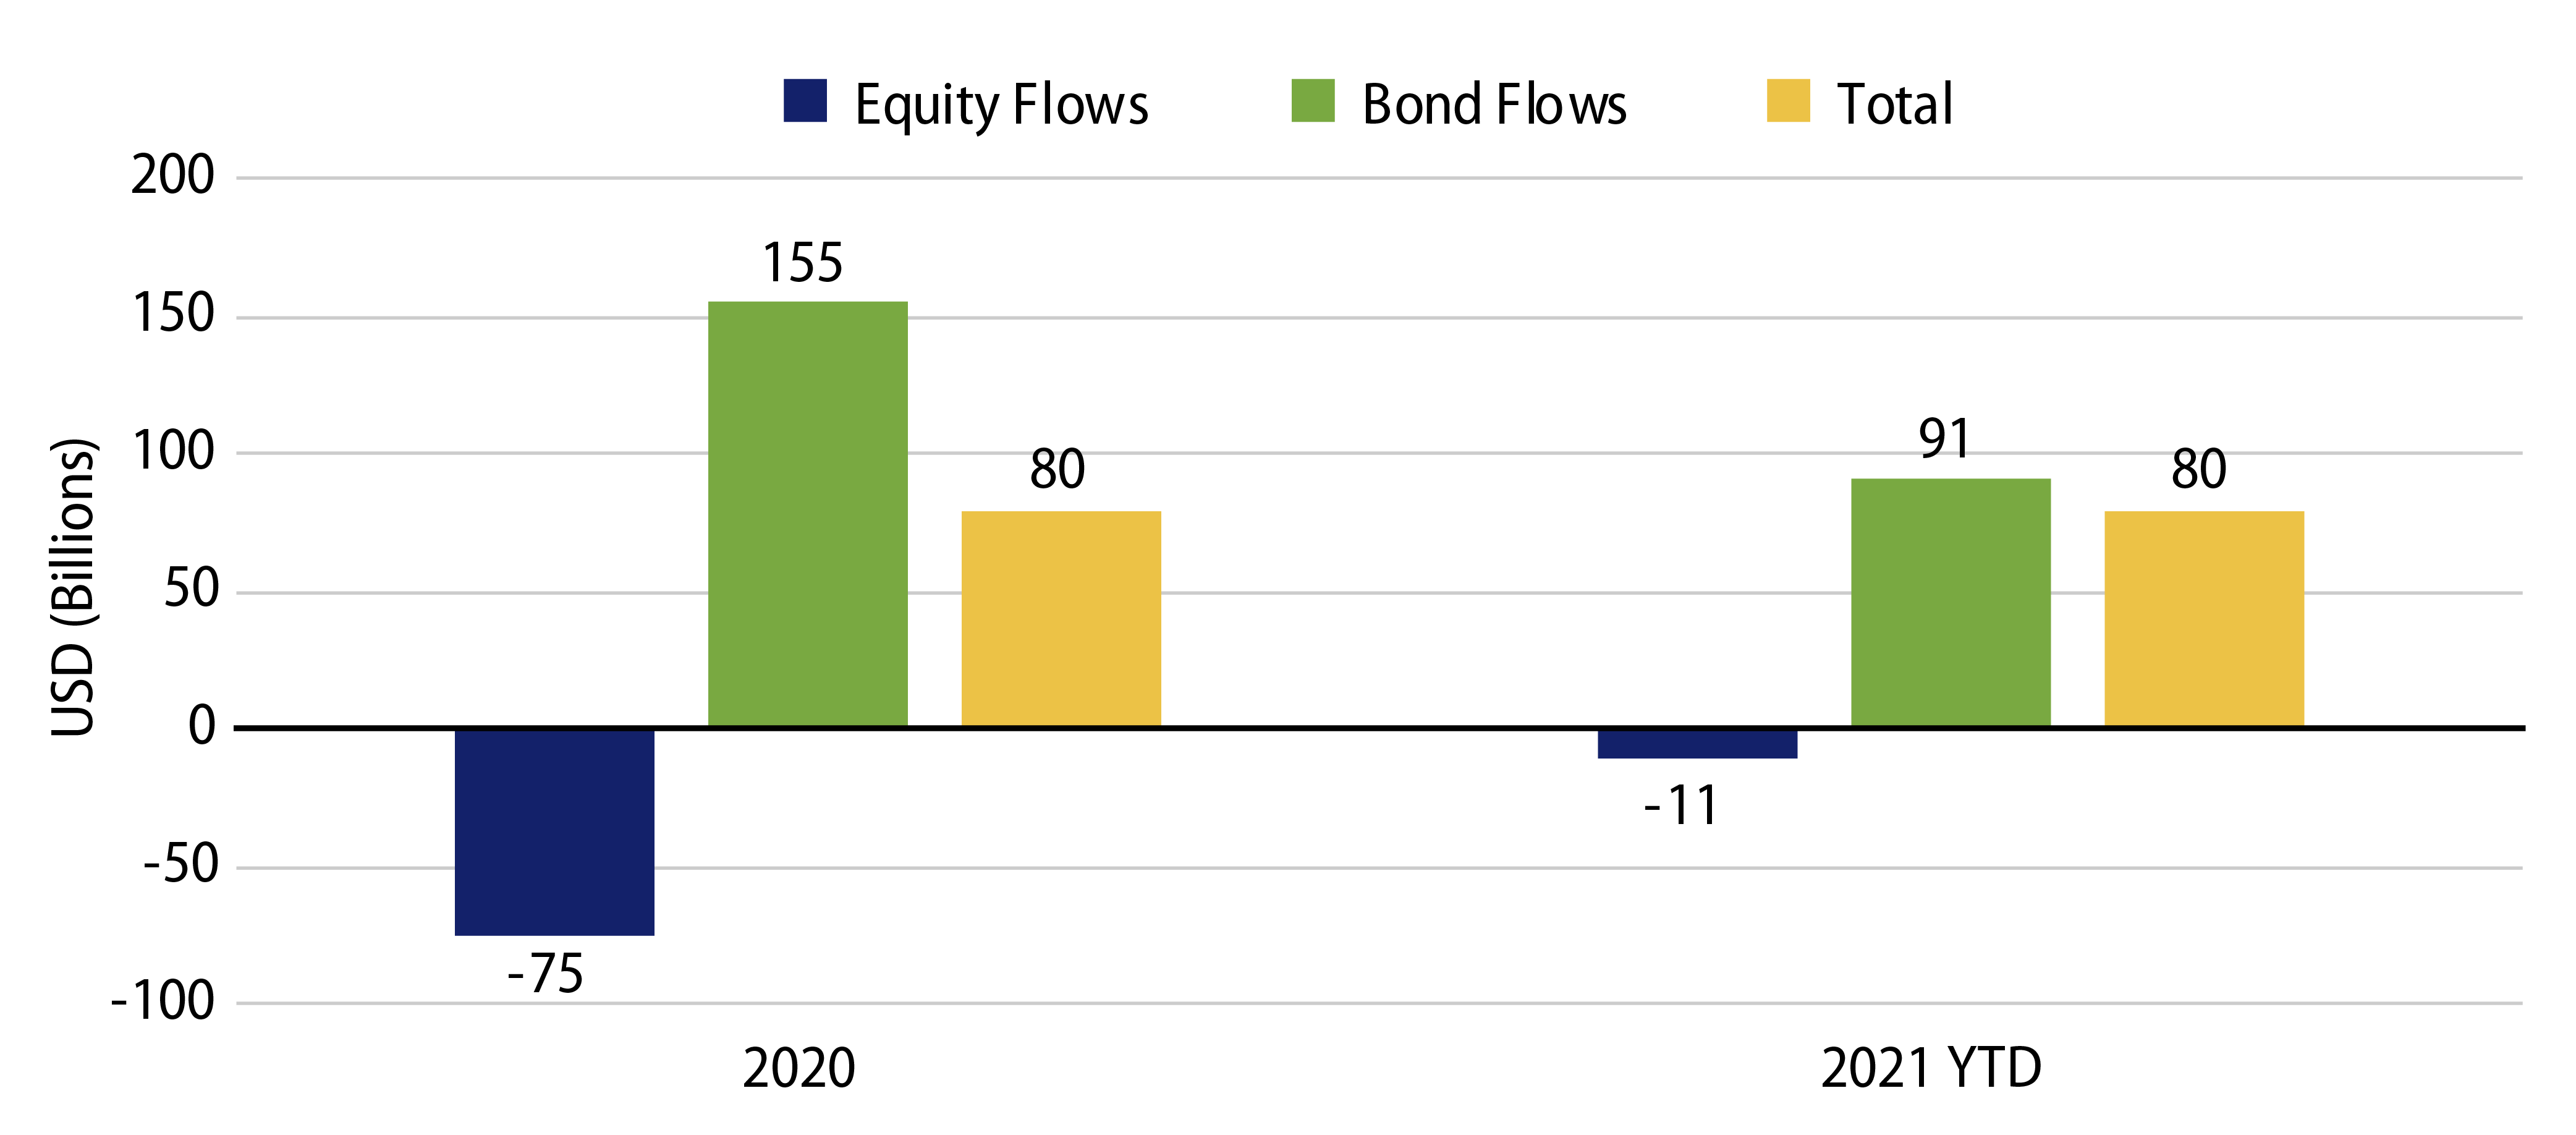 Portfolio Inflows Remain Healthy—YTD Bond Inflows of $91 Billion vs. Equity Outflows of $11 Billion